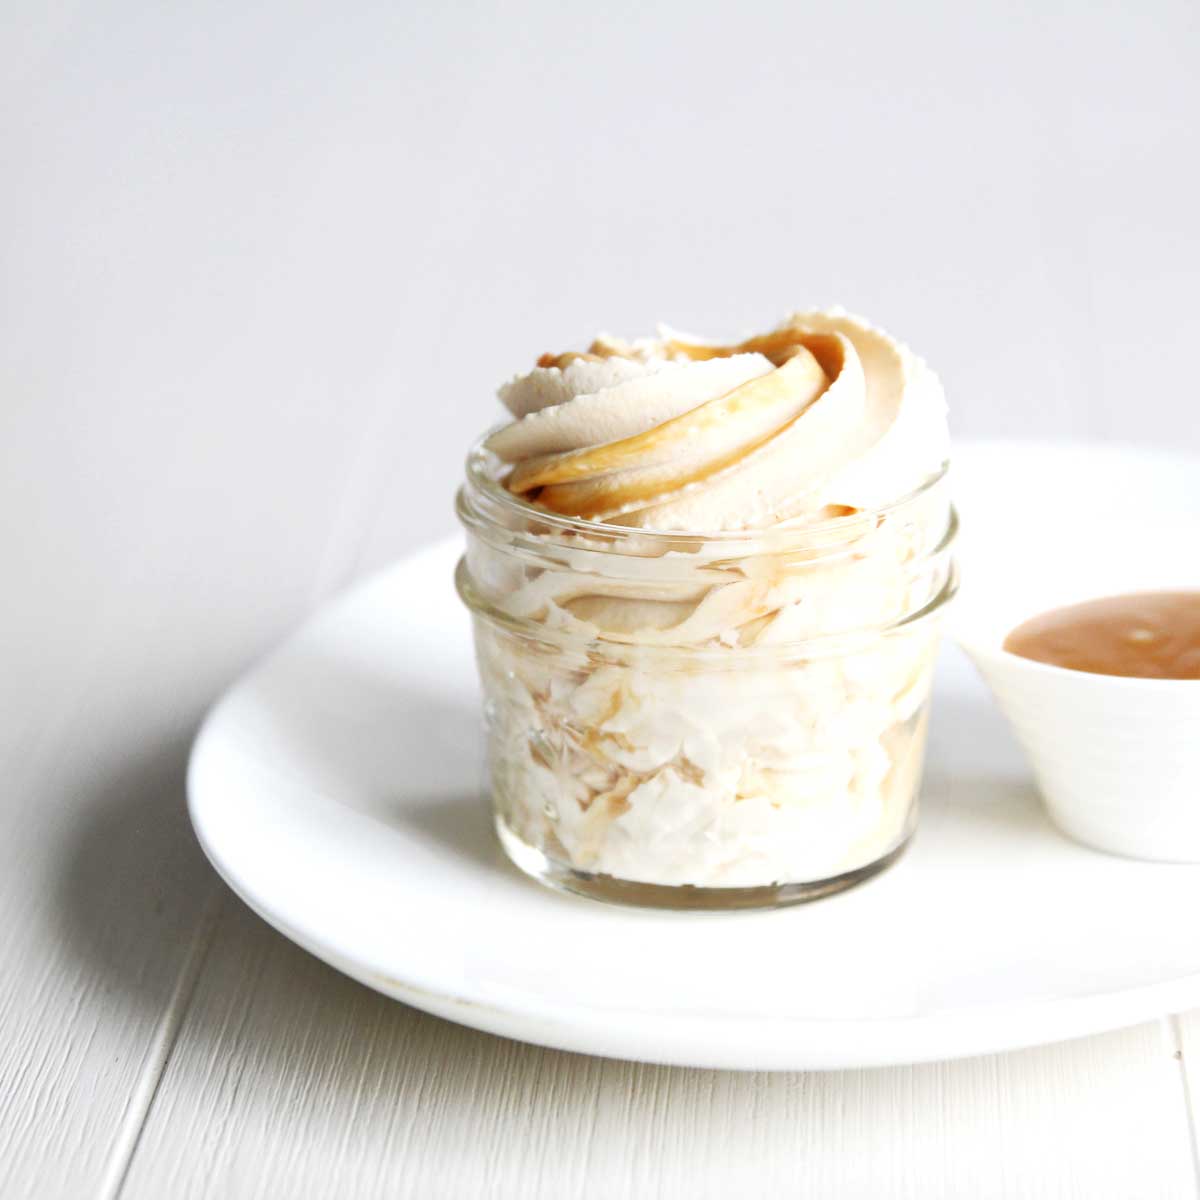 Swirled Caramel Whipped Cream Recipe Perfect for Coffee, Cakes and More - Caramel Whipped Cream